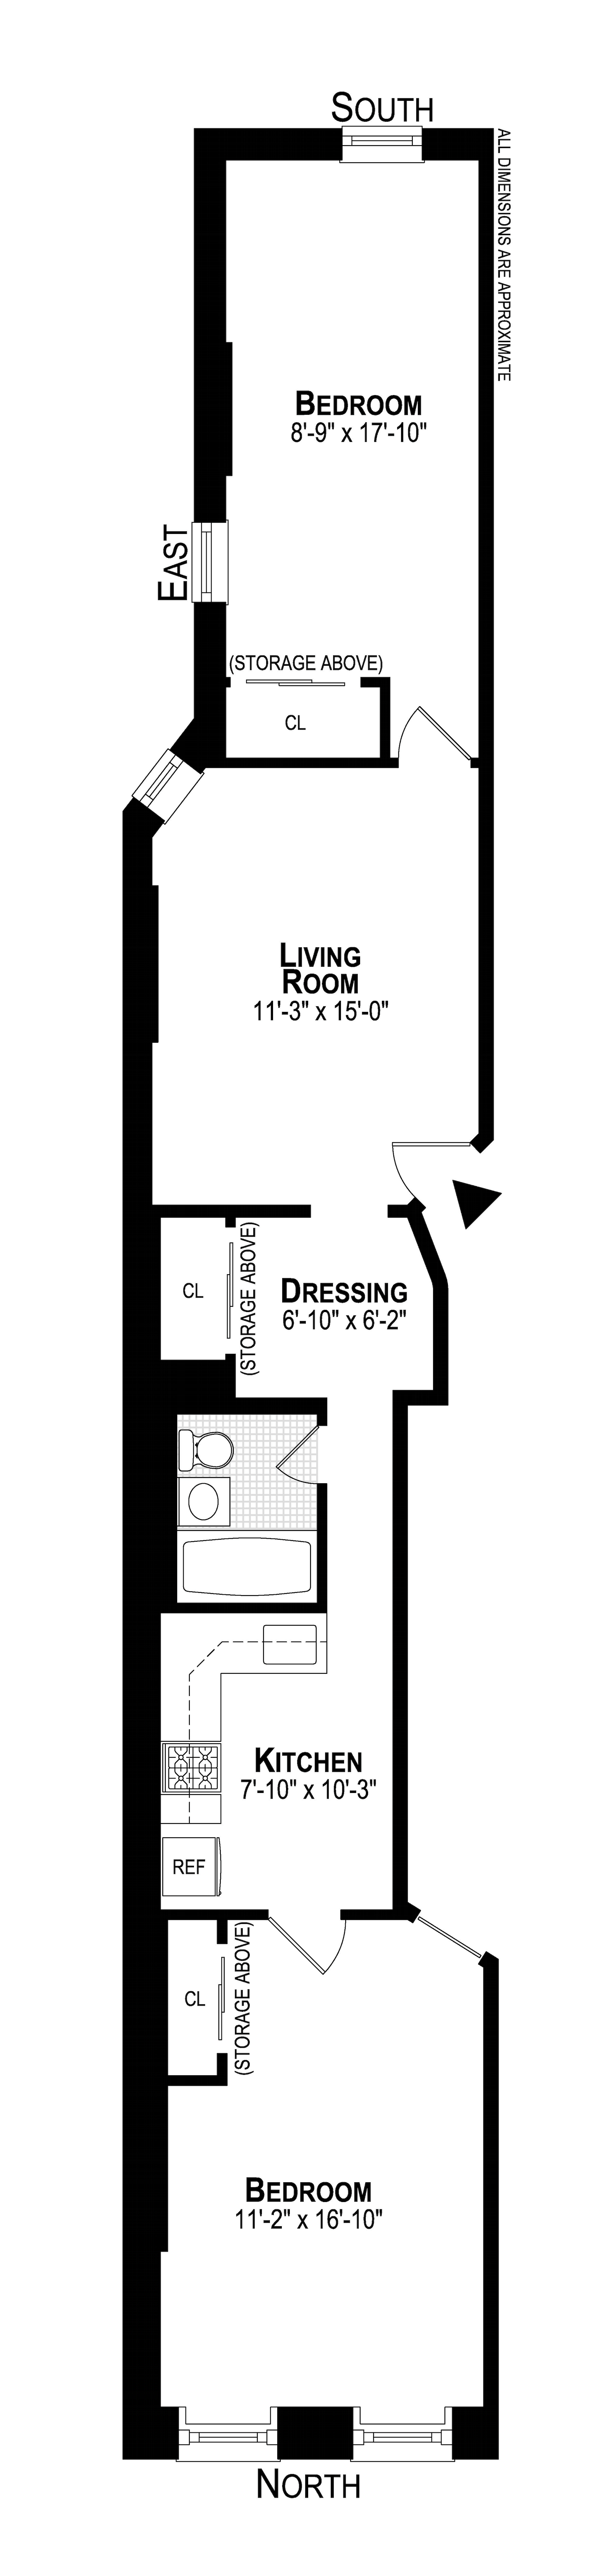 Floorplan for 108 West 17th Street, 7